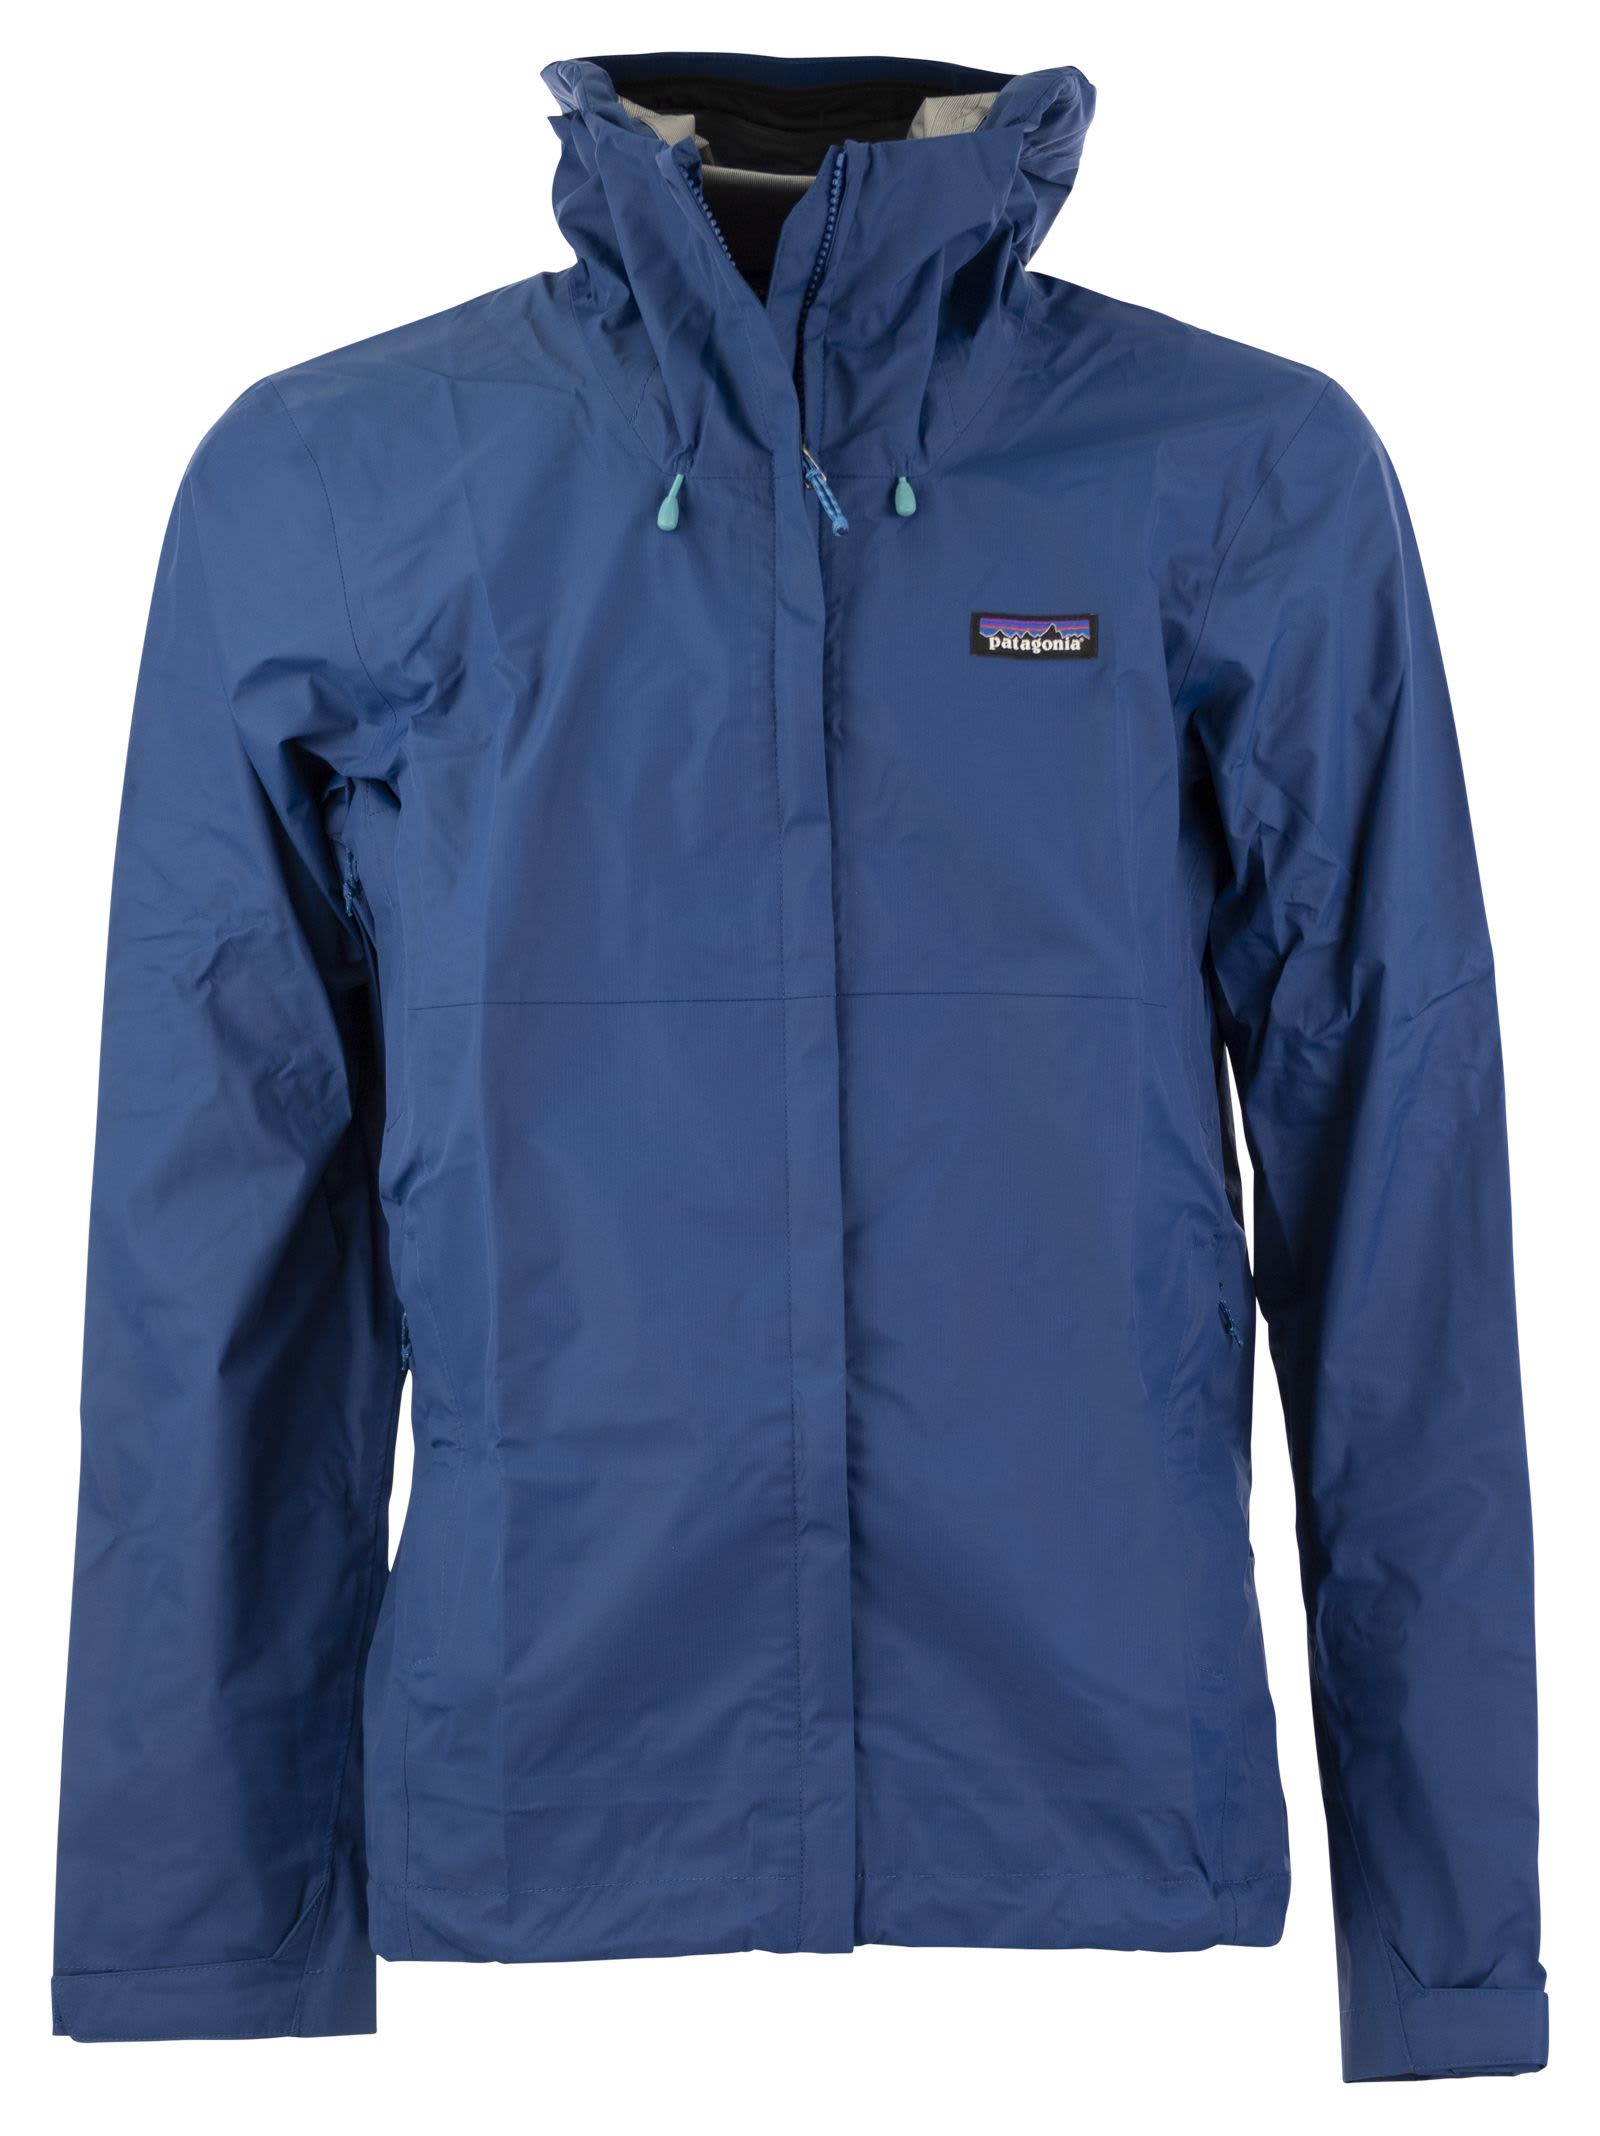 patagonia nylon rainproof jacket